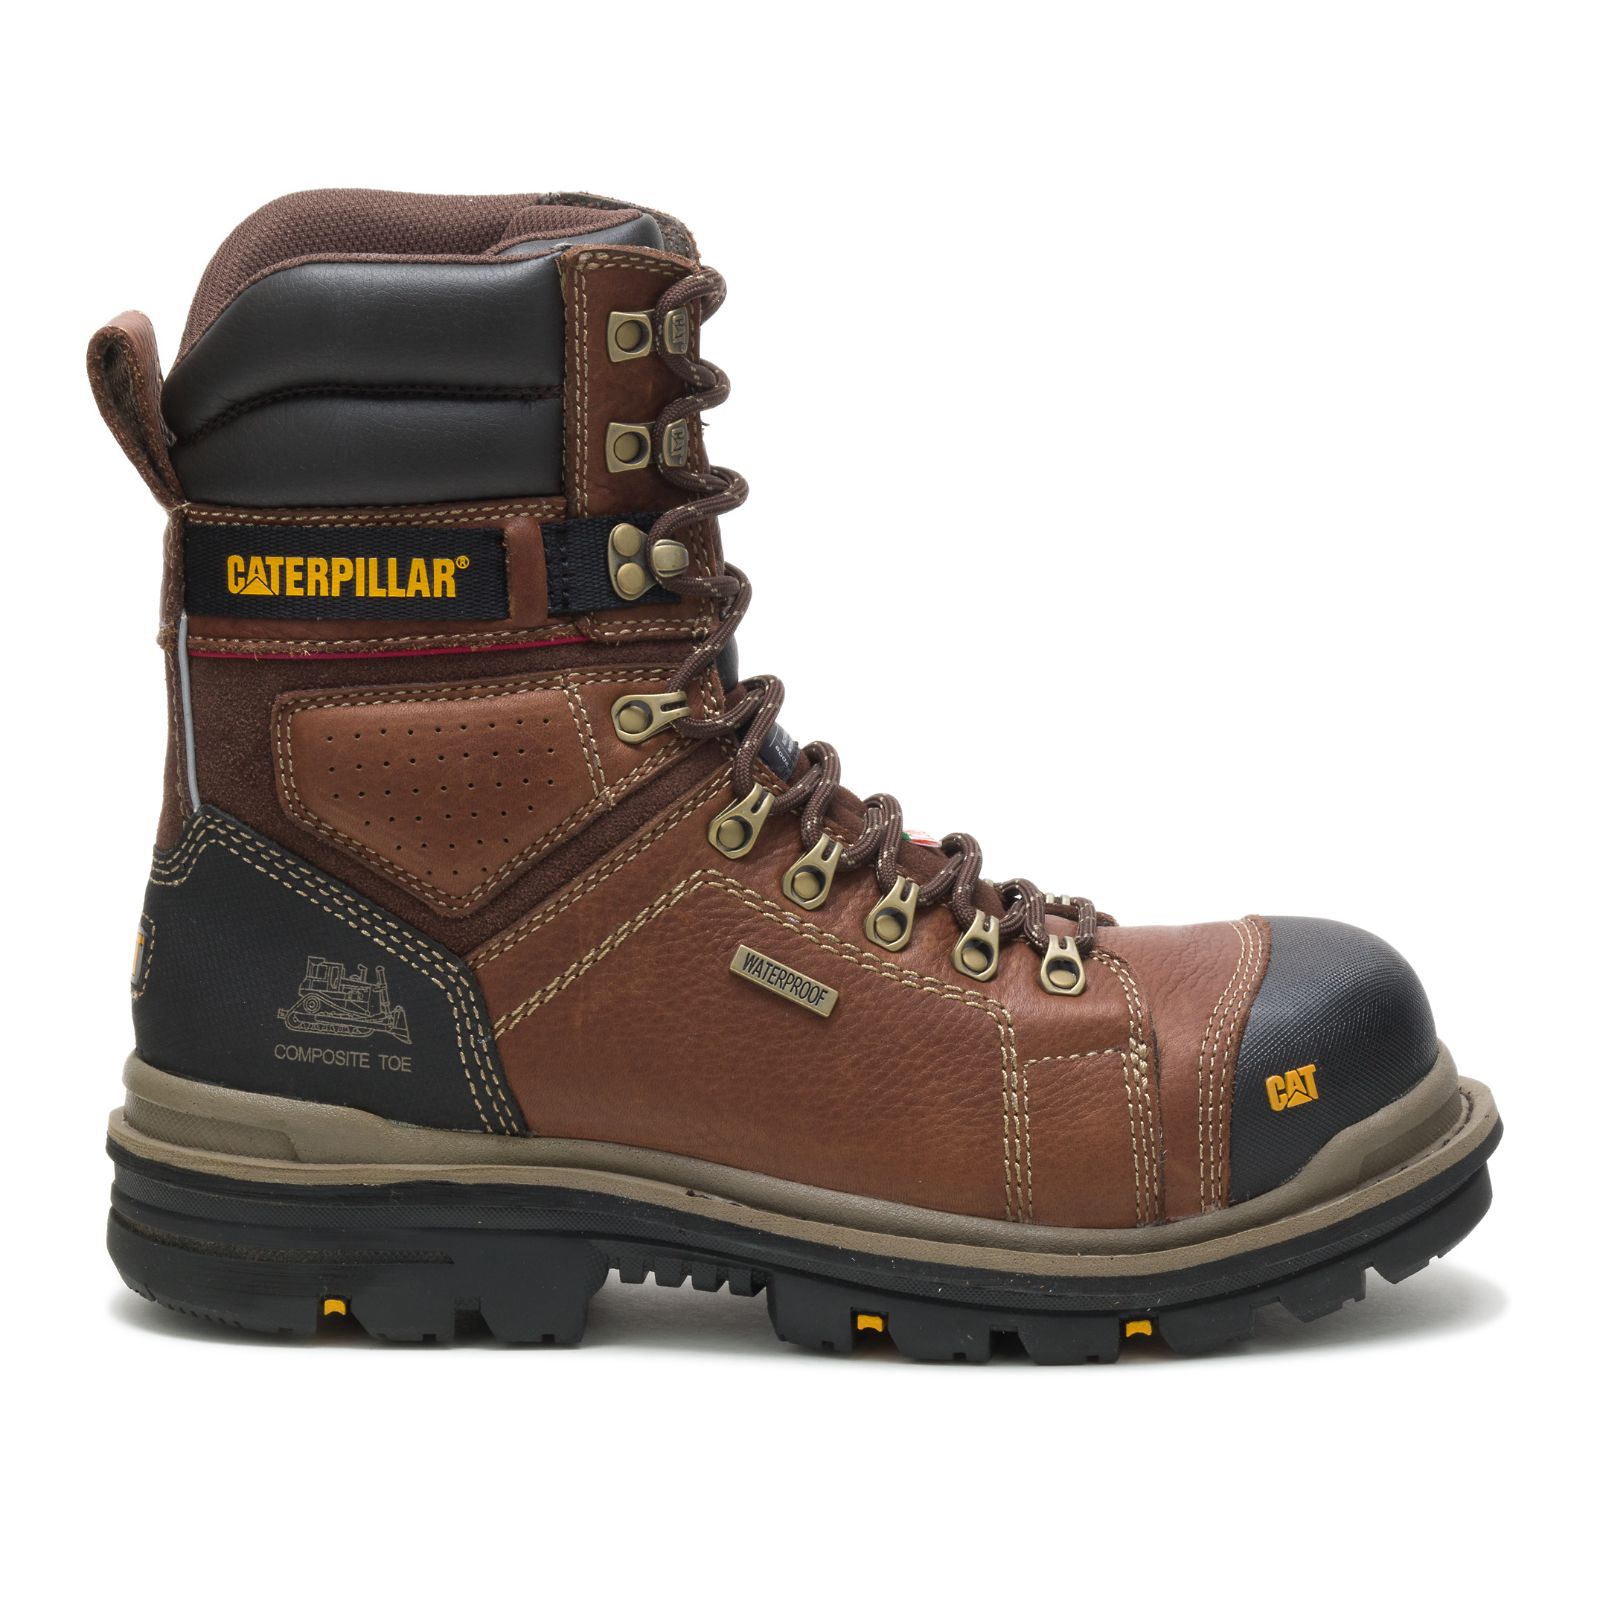 Caterpillar Boots Lahore - Caterpillar Hauler 8" Waterproof Composite Toe Csa Mens Work Boots Brown (783560-CKI)